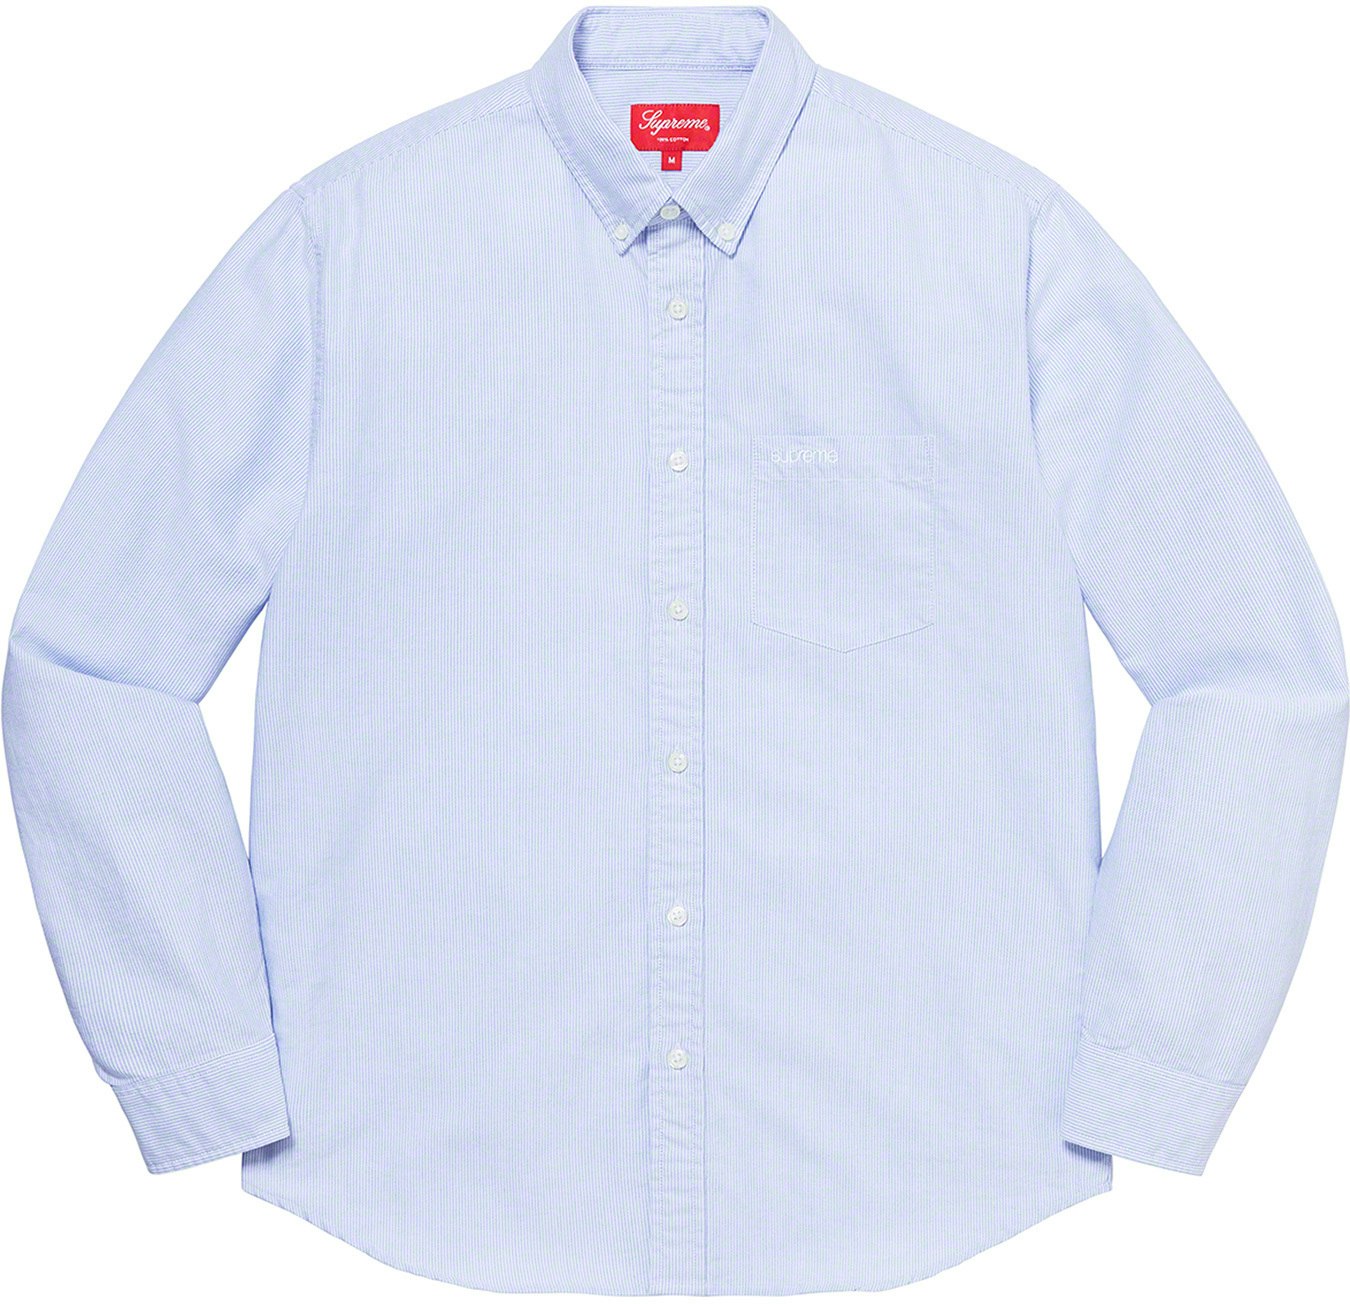 Supreme Stripe Oxford Shirt Blue - Novelship